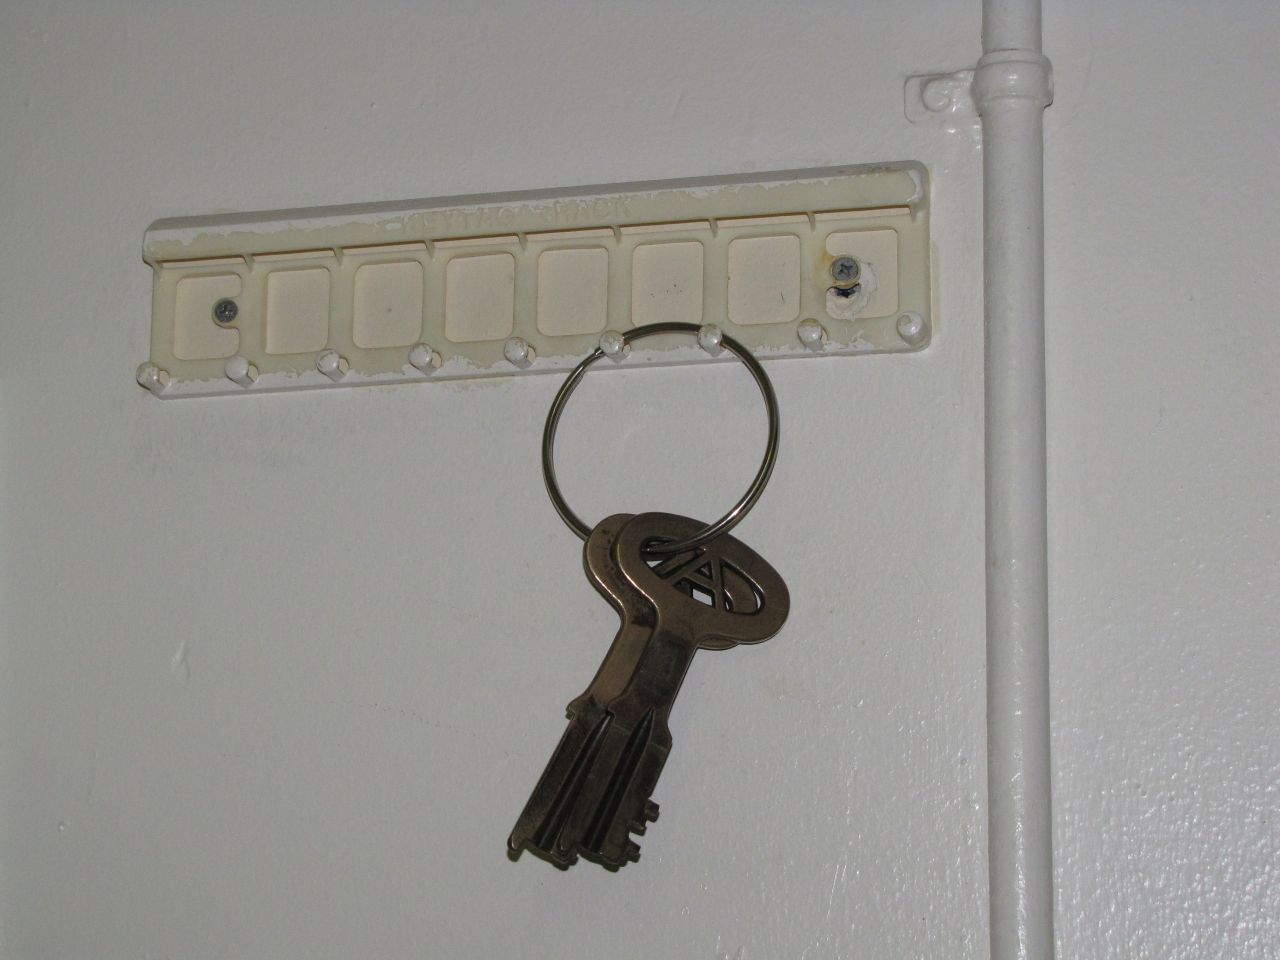 Jail keys - same as used in movie "The Green Mile"